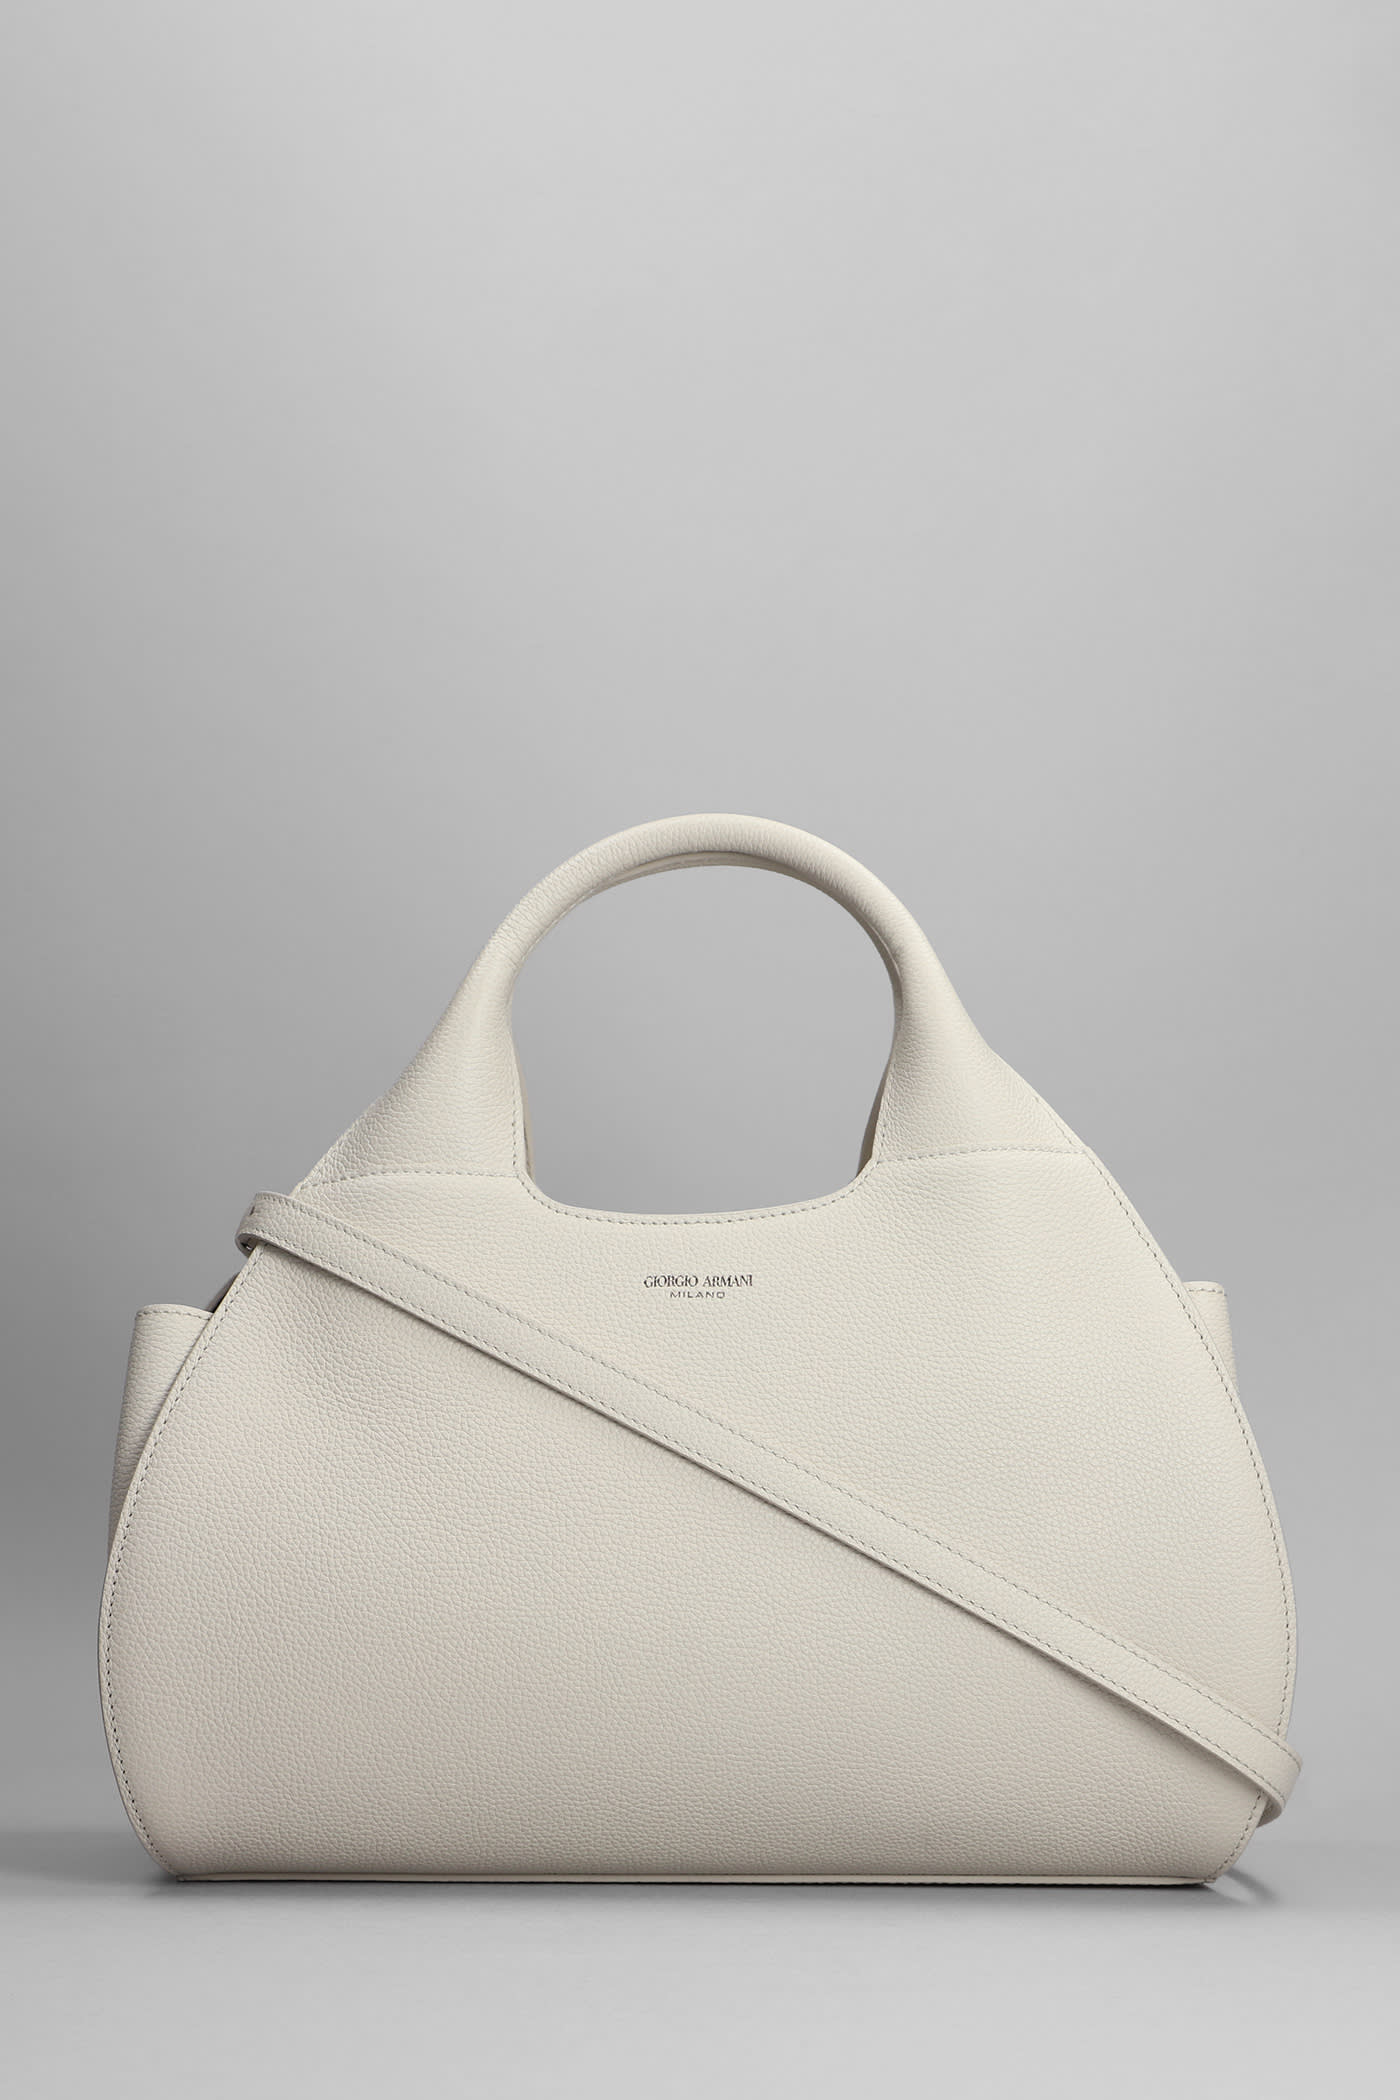 Giorgio Armani Hand Bag In Beige Leather